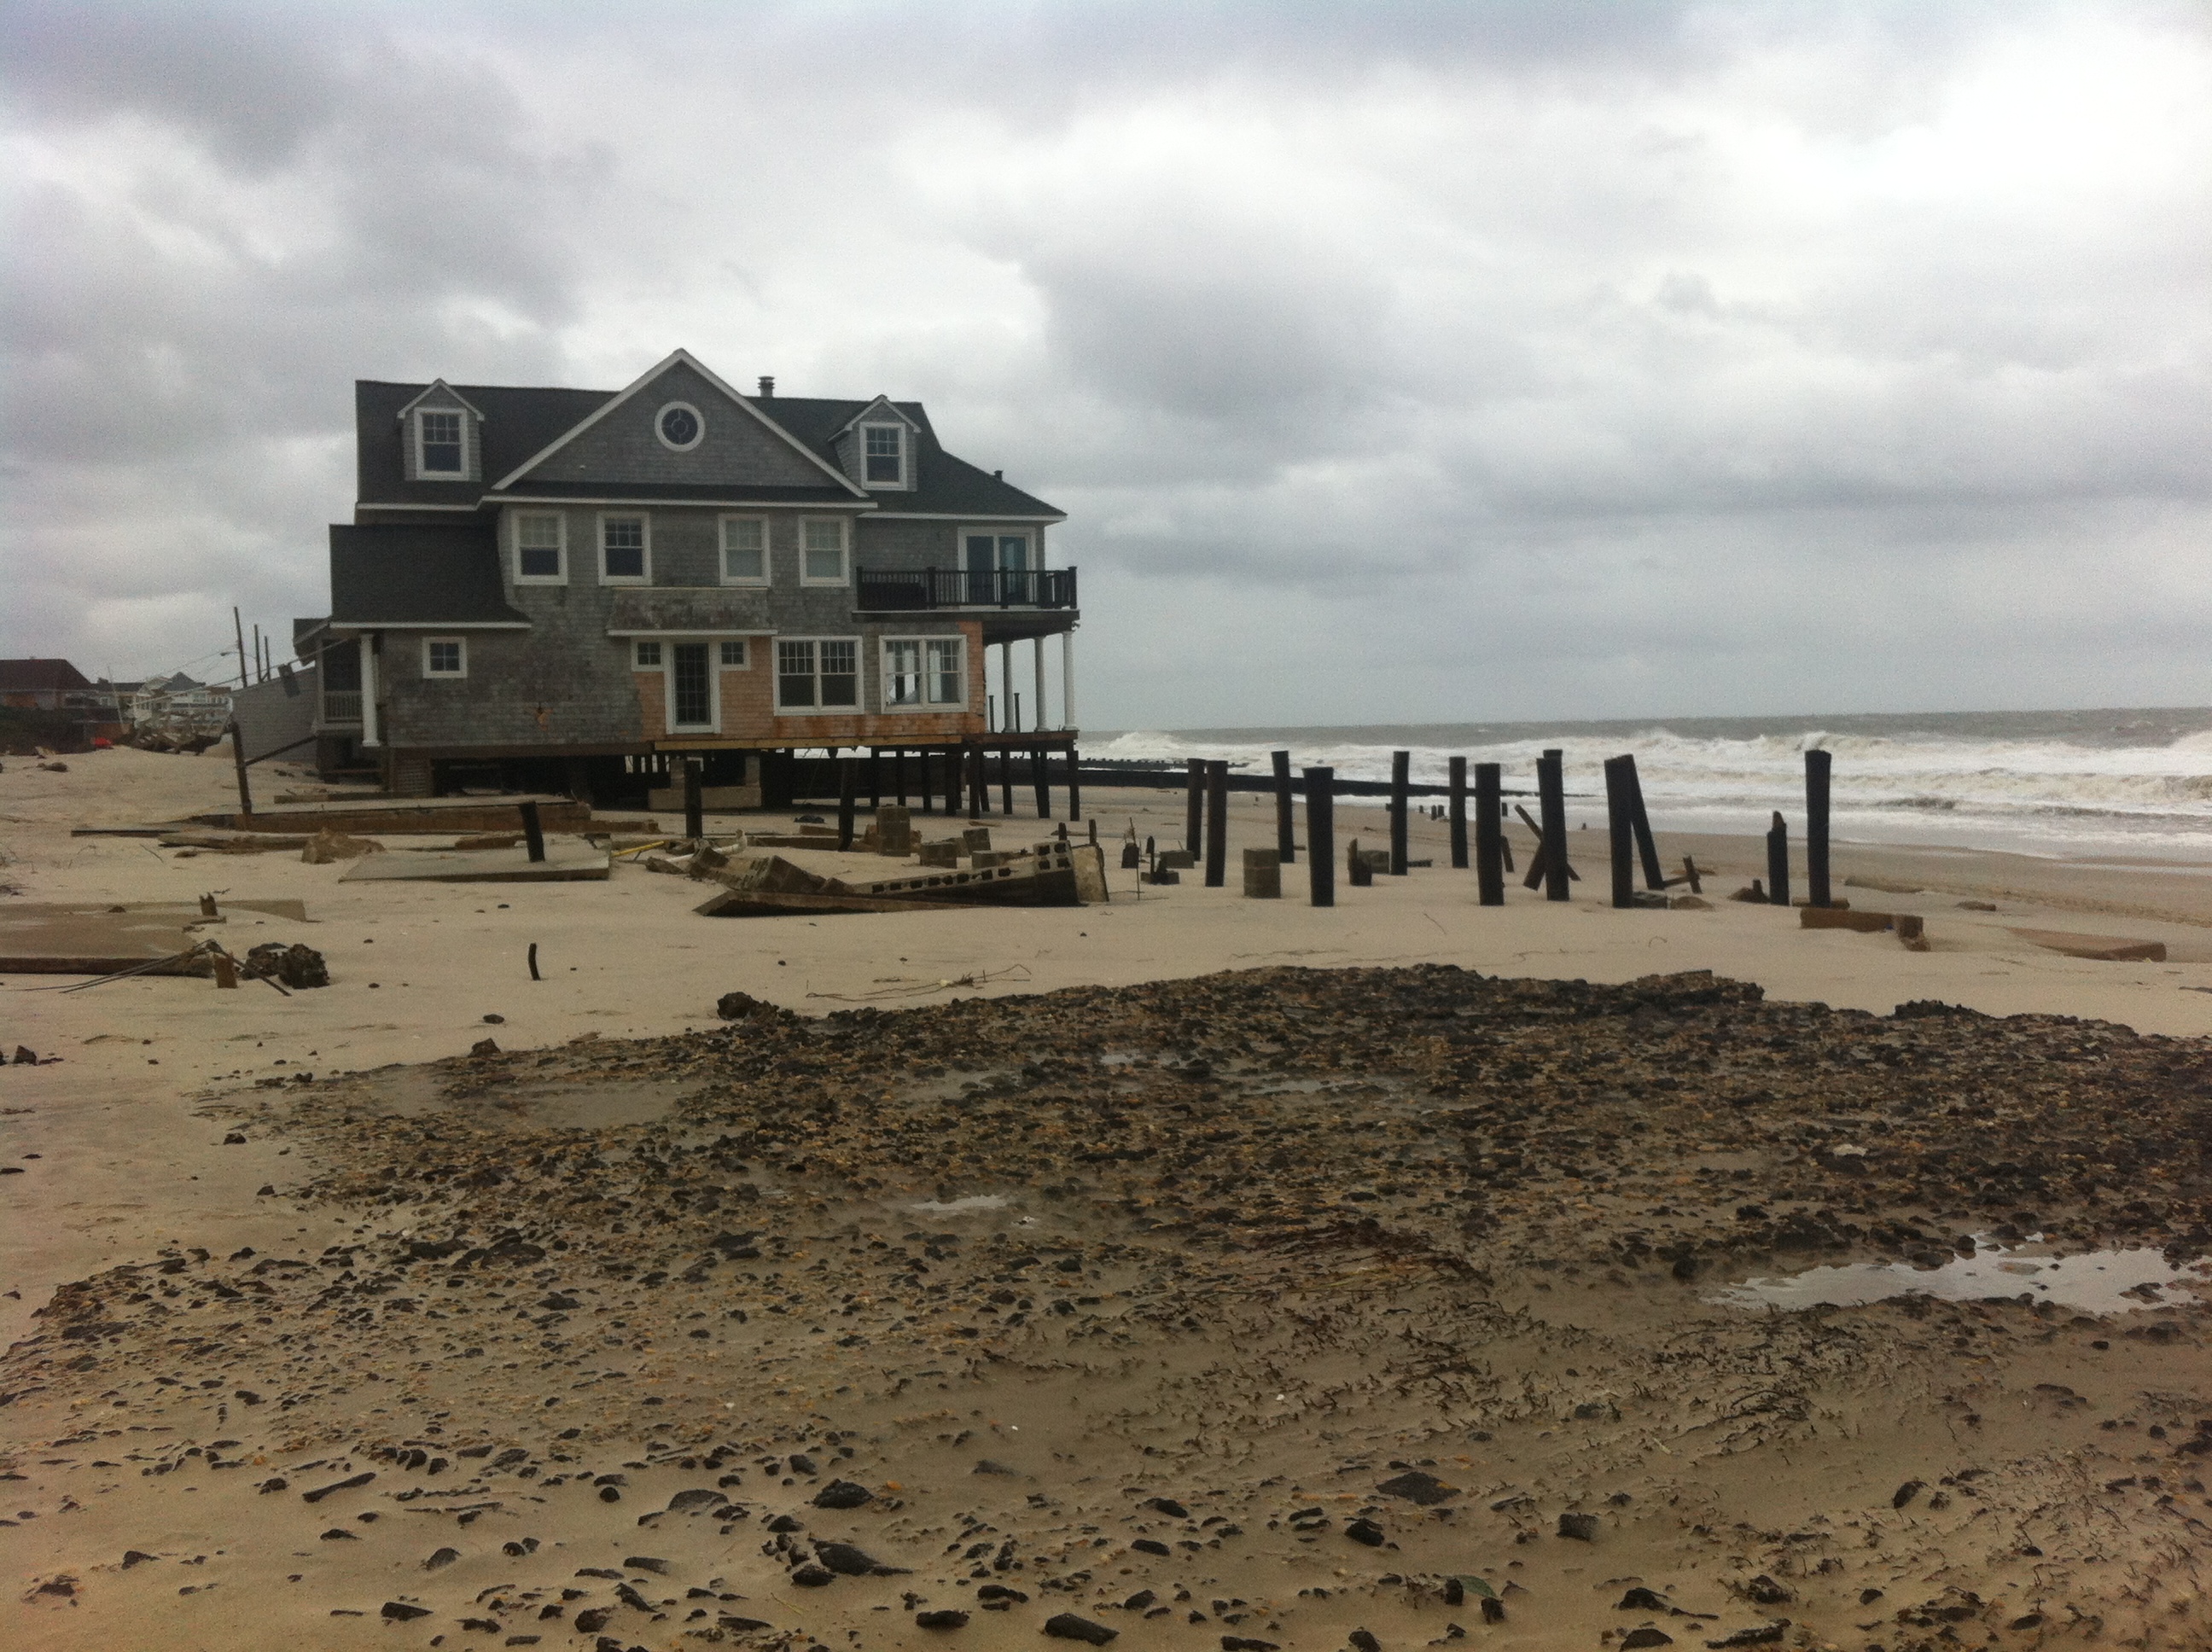 Bay Head NJ devastated by Hurricane Sandy